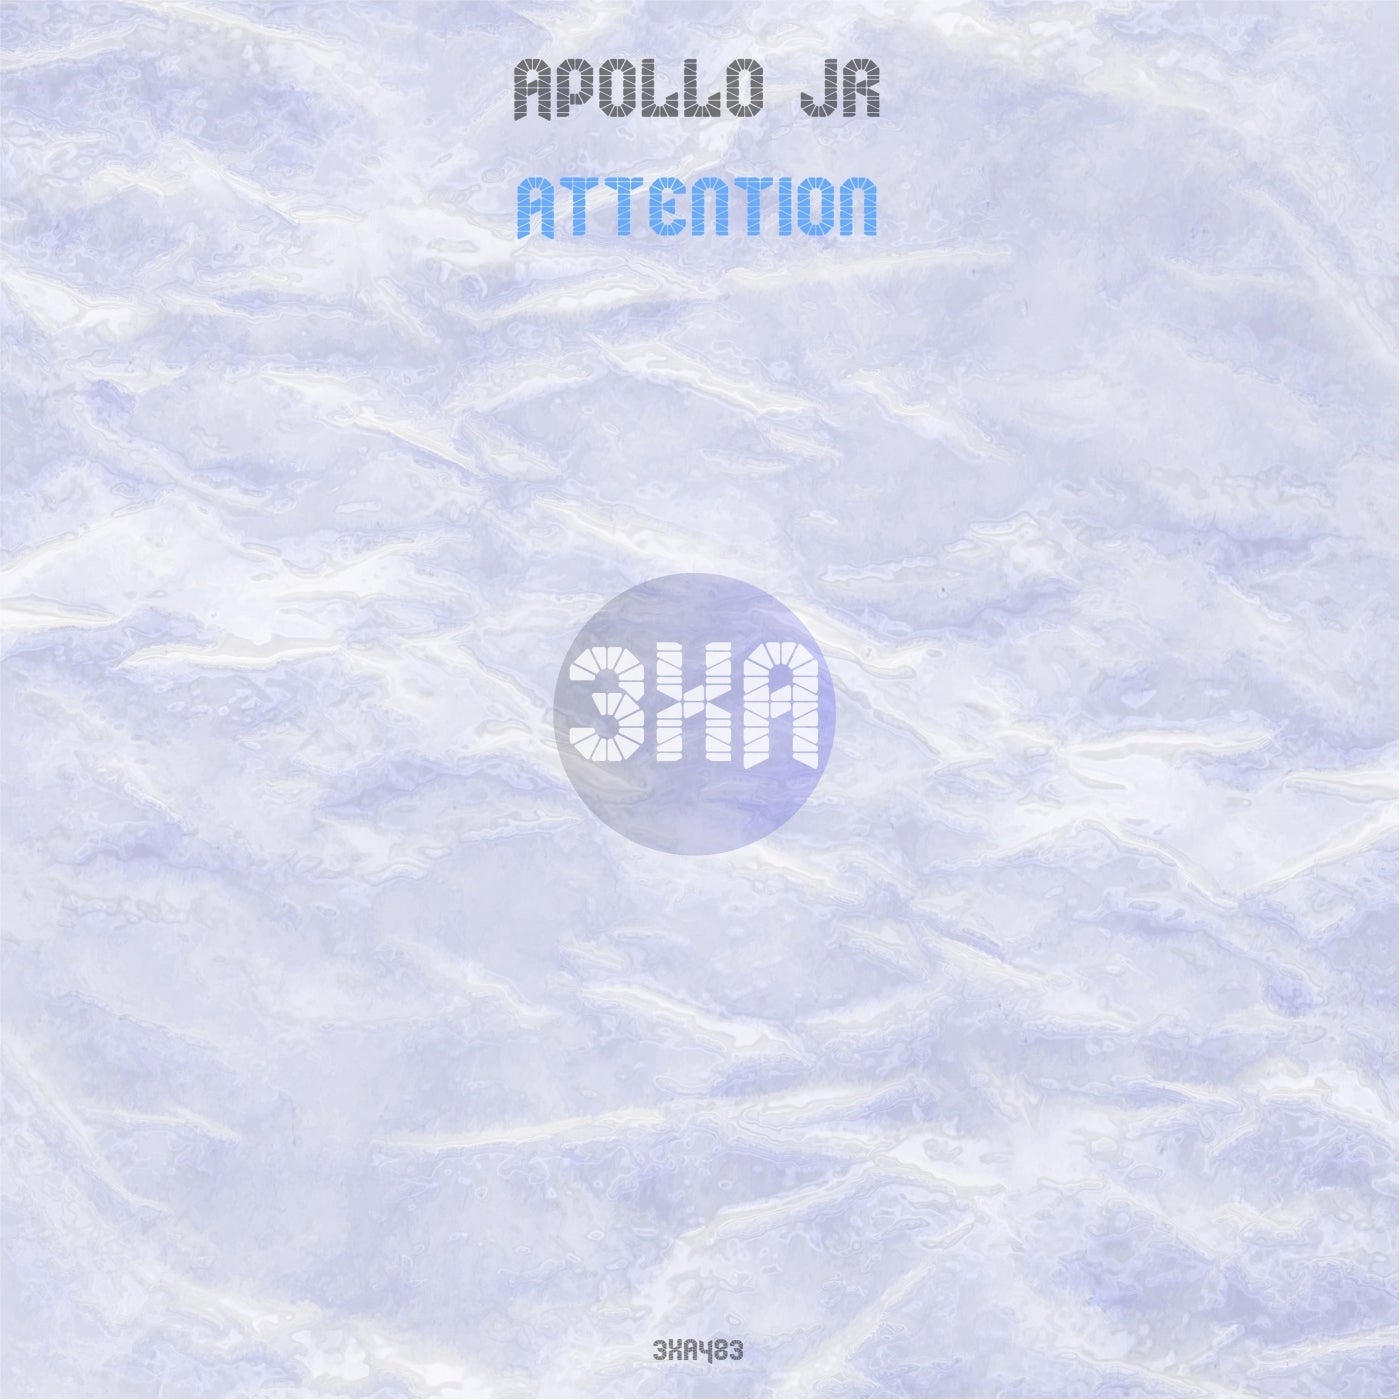 Apollo Jr – Attention [3XA483]